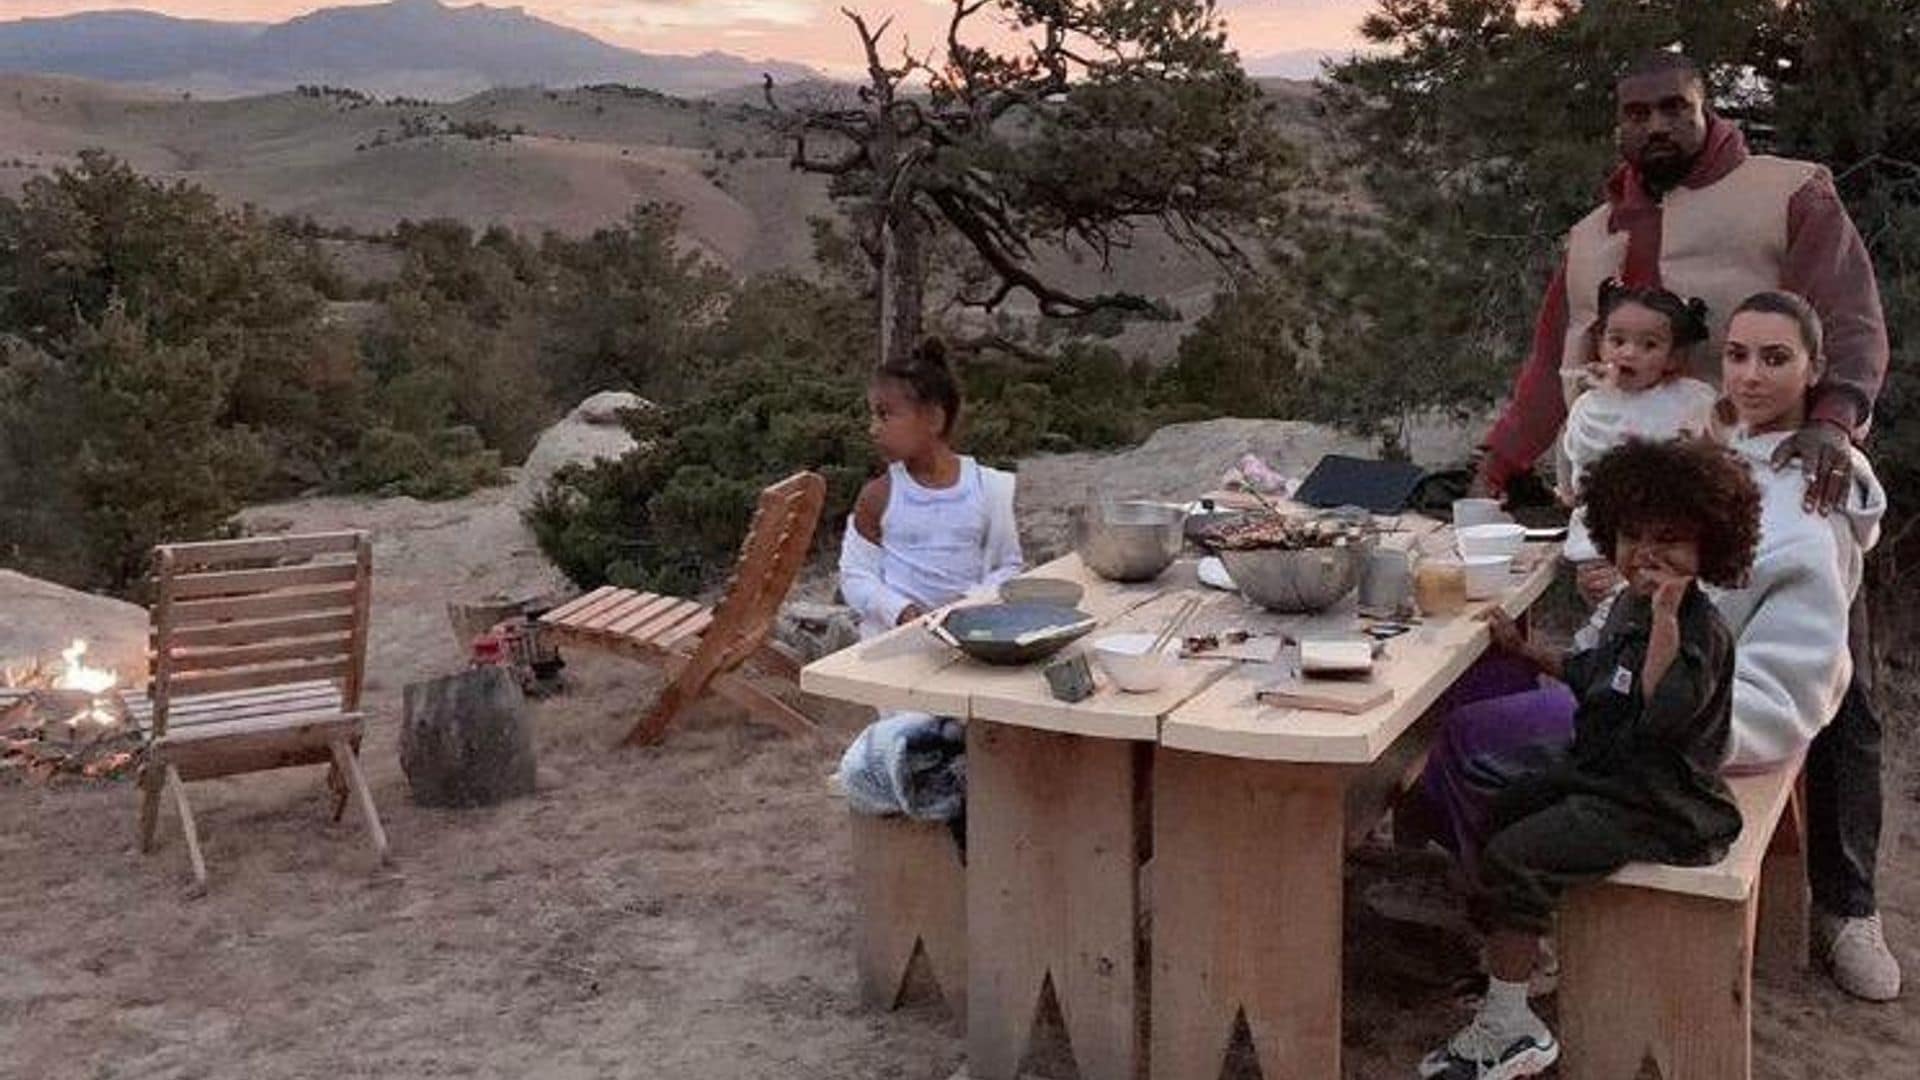 Kim Kardashian shares idyllic Wyoming family photo after saying she wants to move there